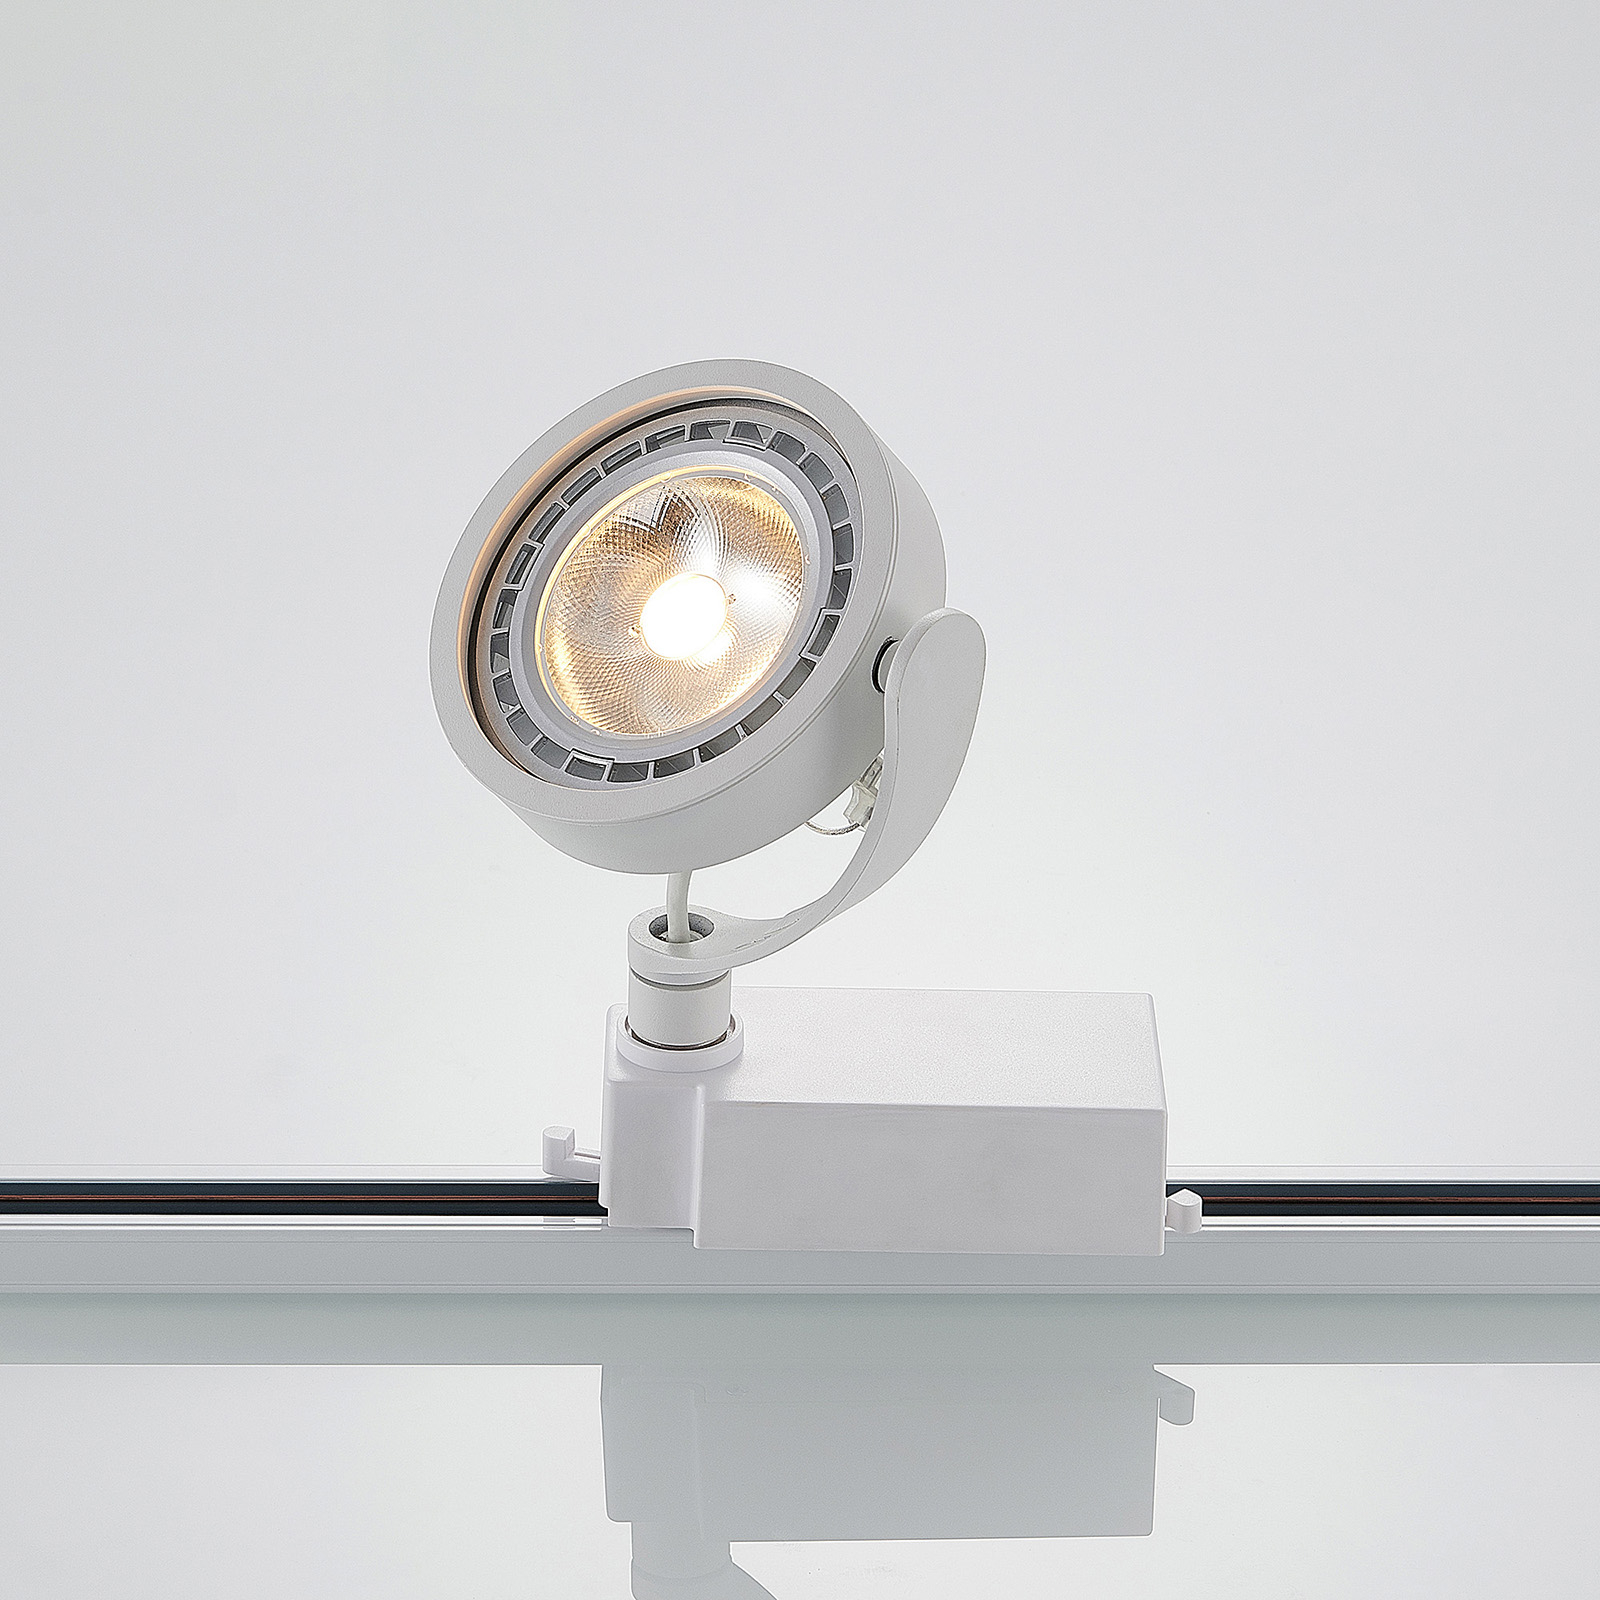 Rick spotlight, two-circuit track lighting system, white, 17.2 cm long